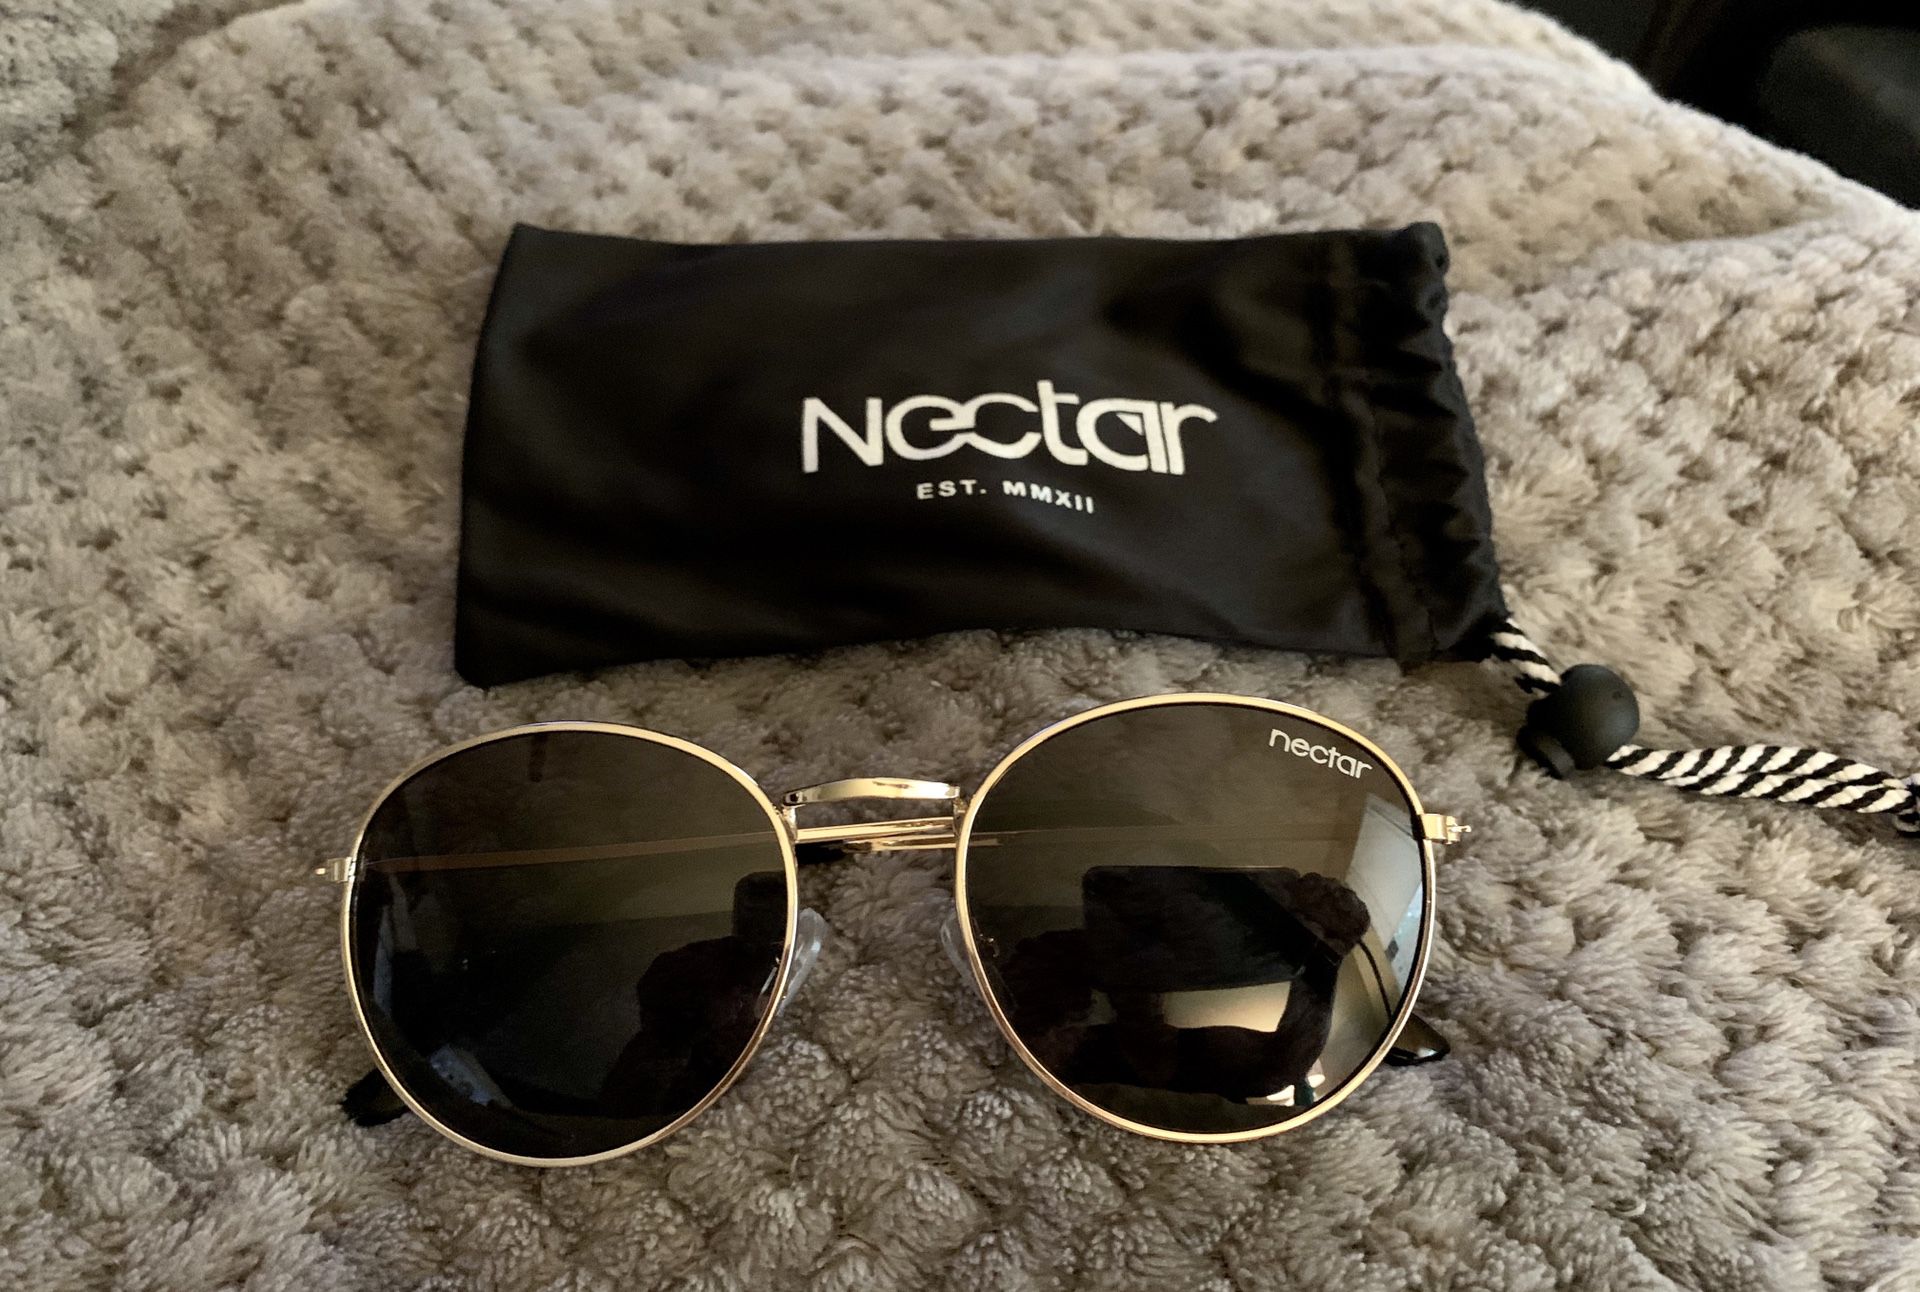 Nectar “Boho” sunglasses